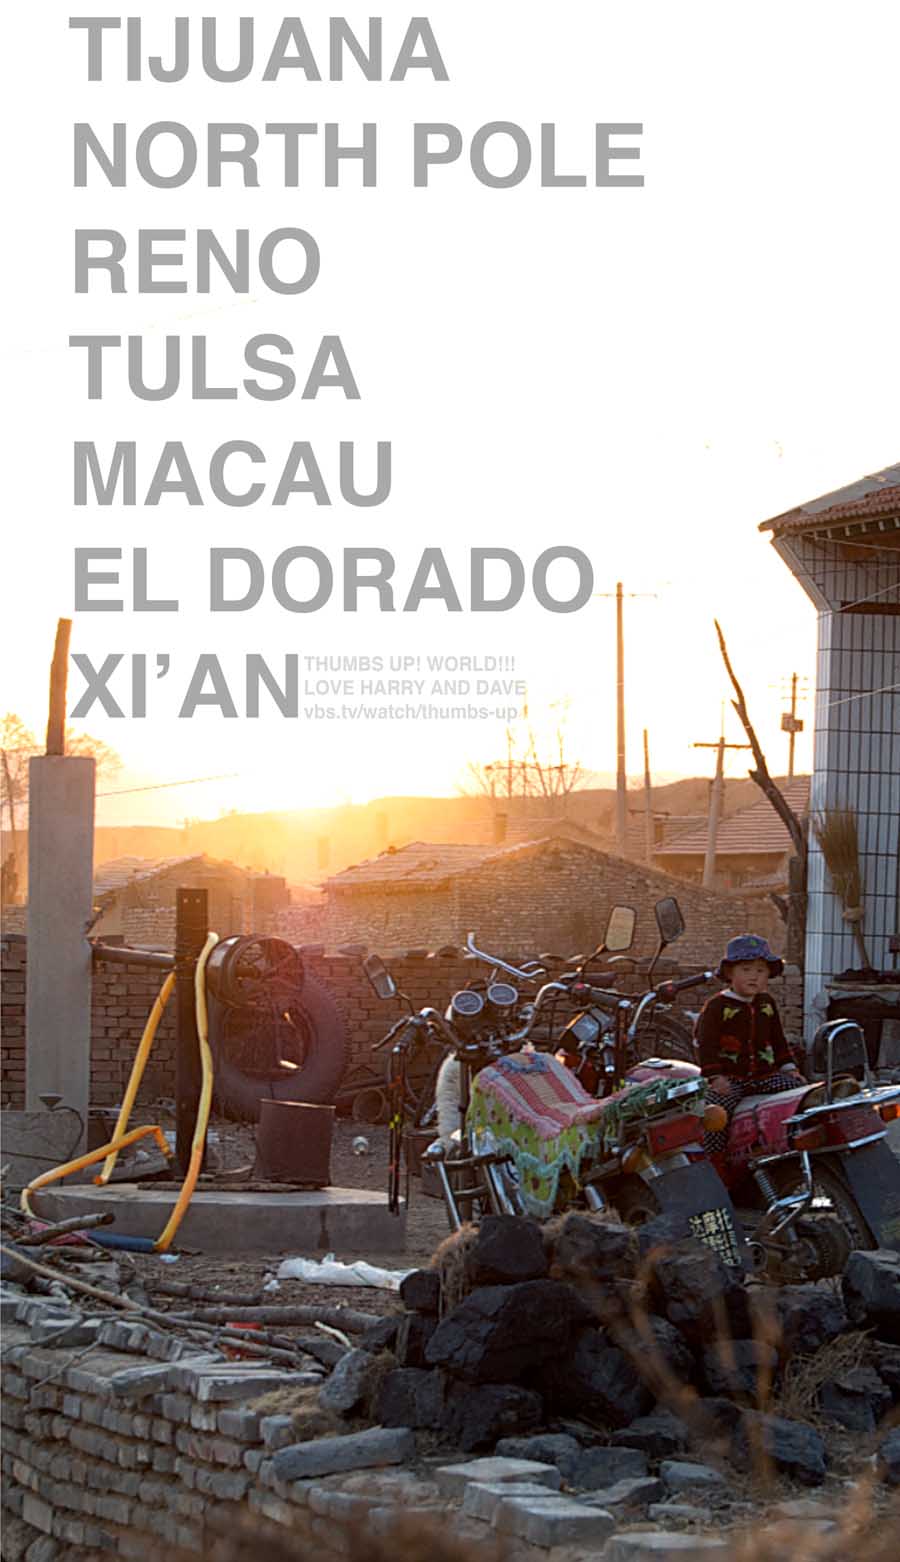 Thumbs Up! hitchhiking show poster - baby on a motercycle - Tijuana, North Pole, Reno, Tulsa, Macau, El Dorado, Xi'an